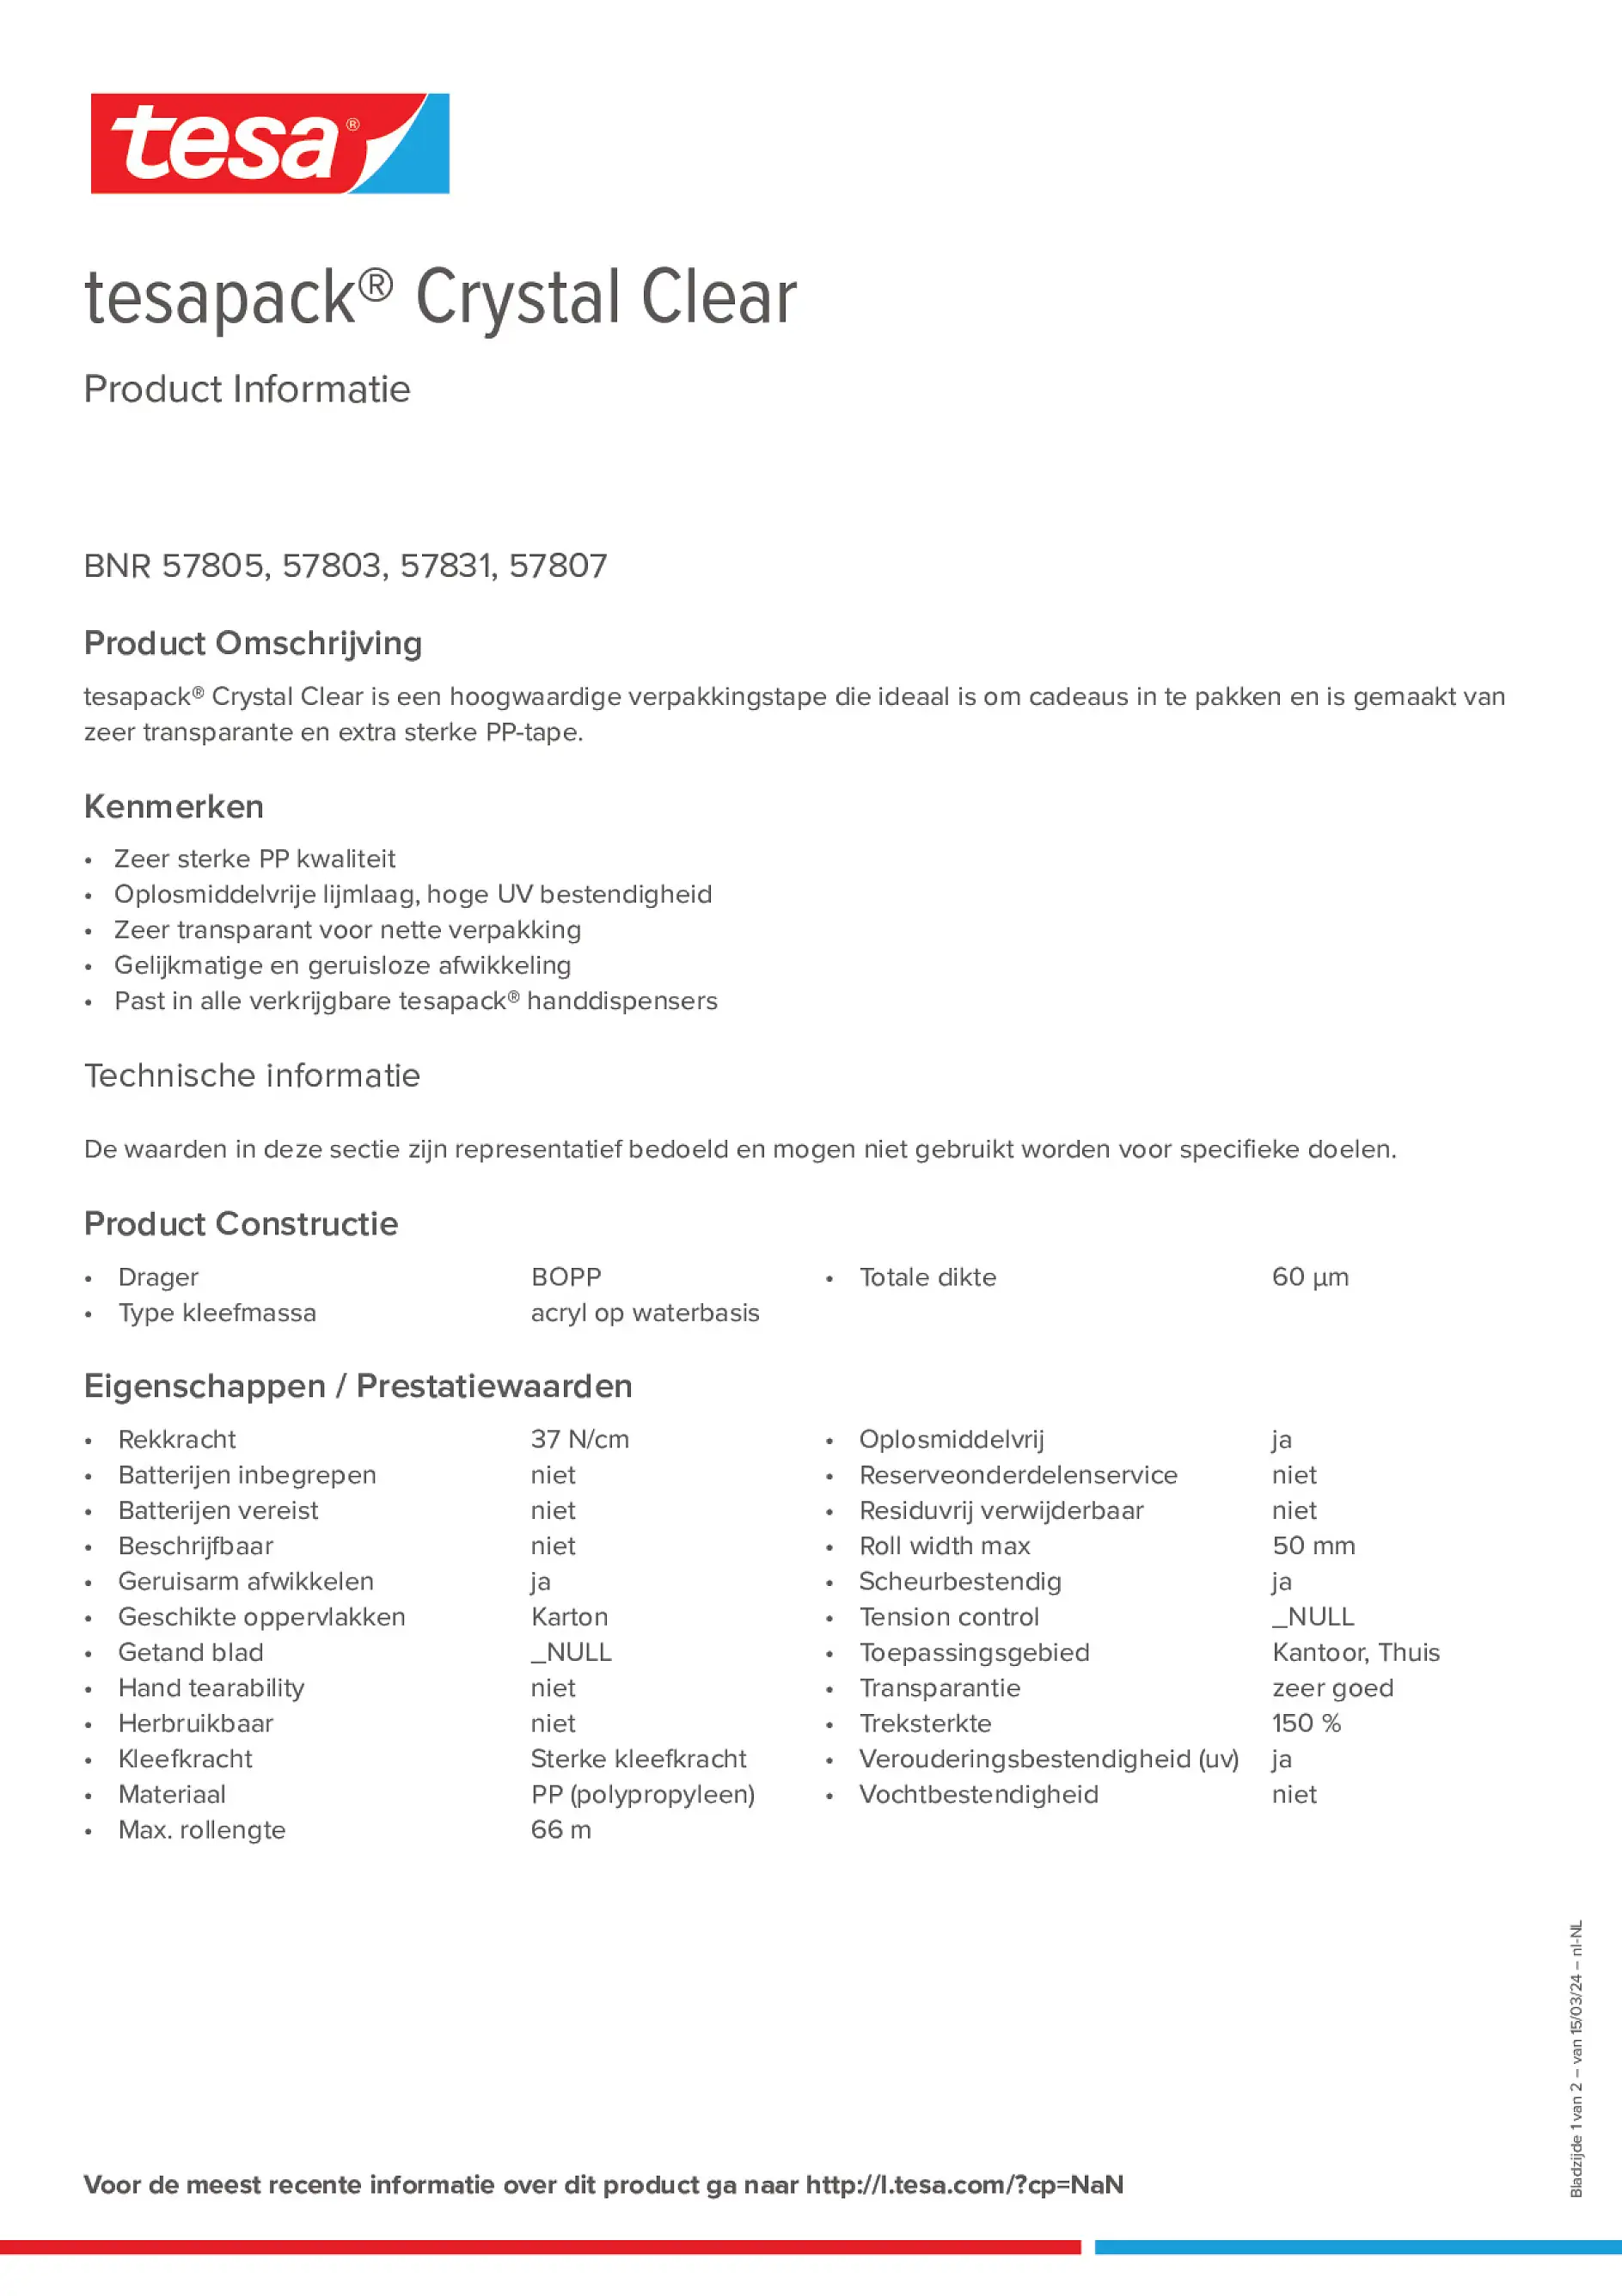 Product information_tesapack® 57807_nl-NL